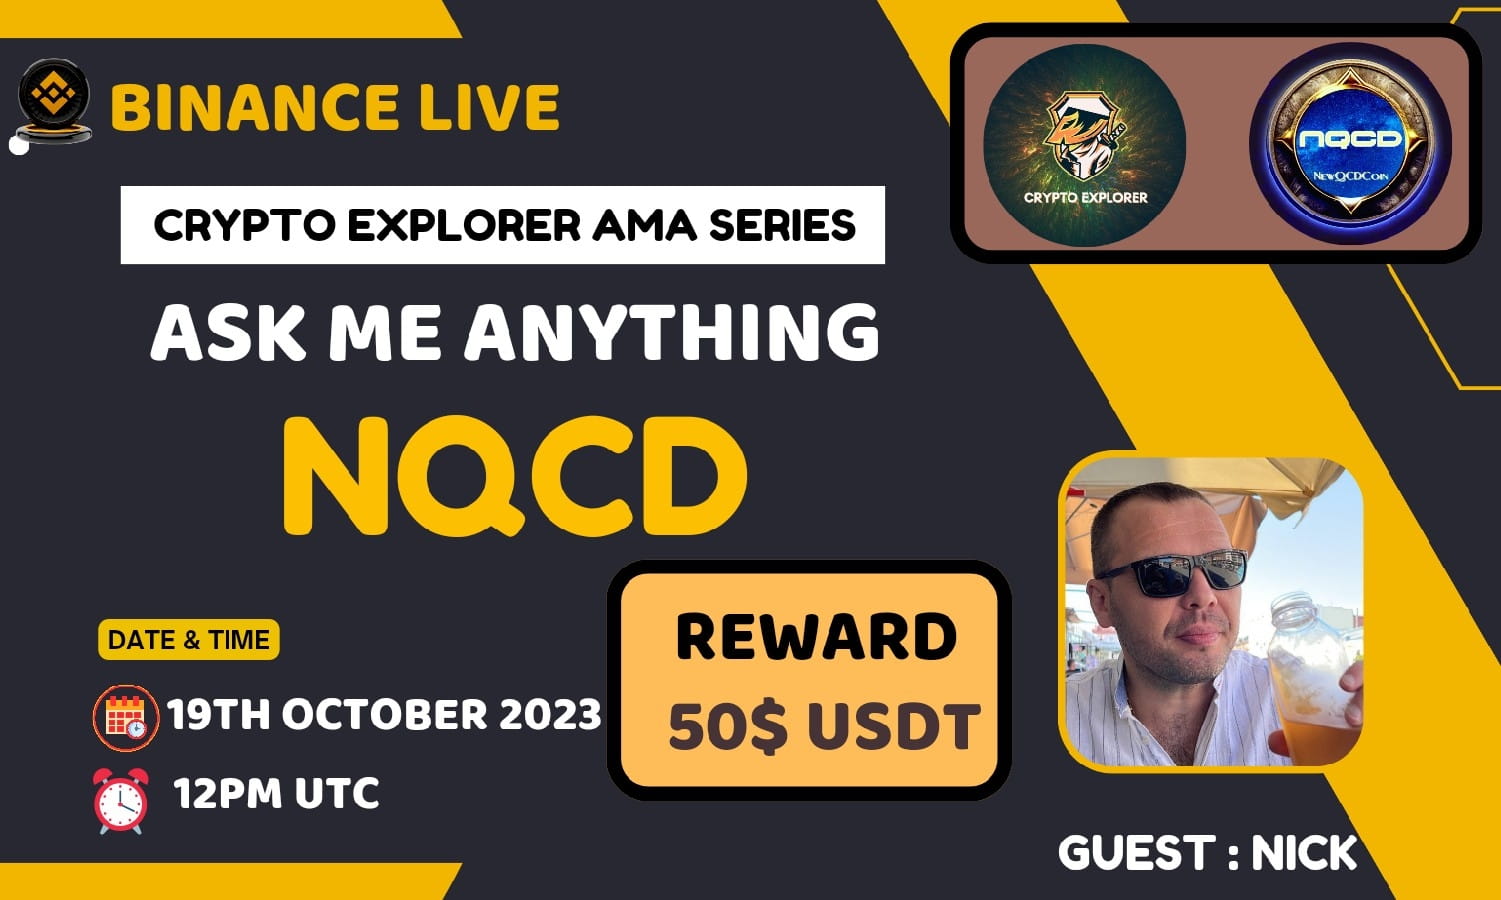 CryptoExplorer AMA With NQCD REWARD: 50$ USDT 